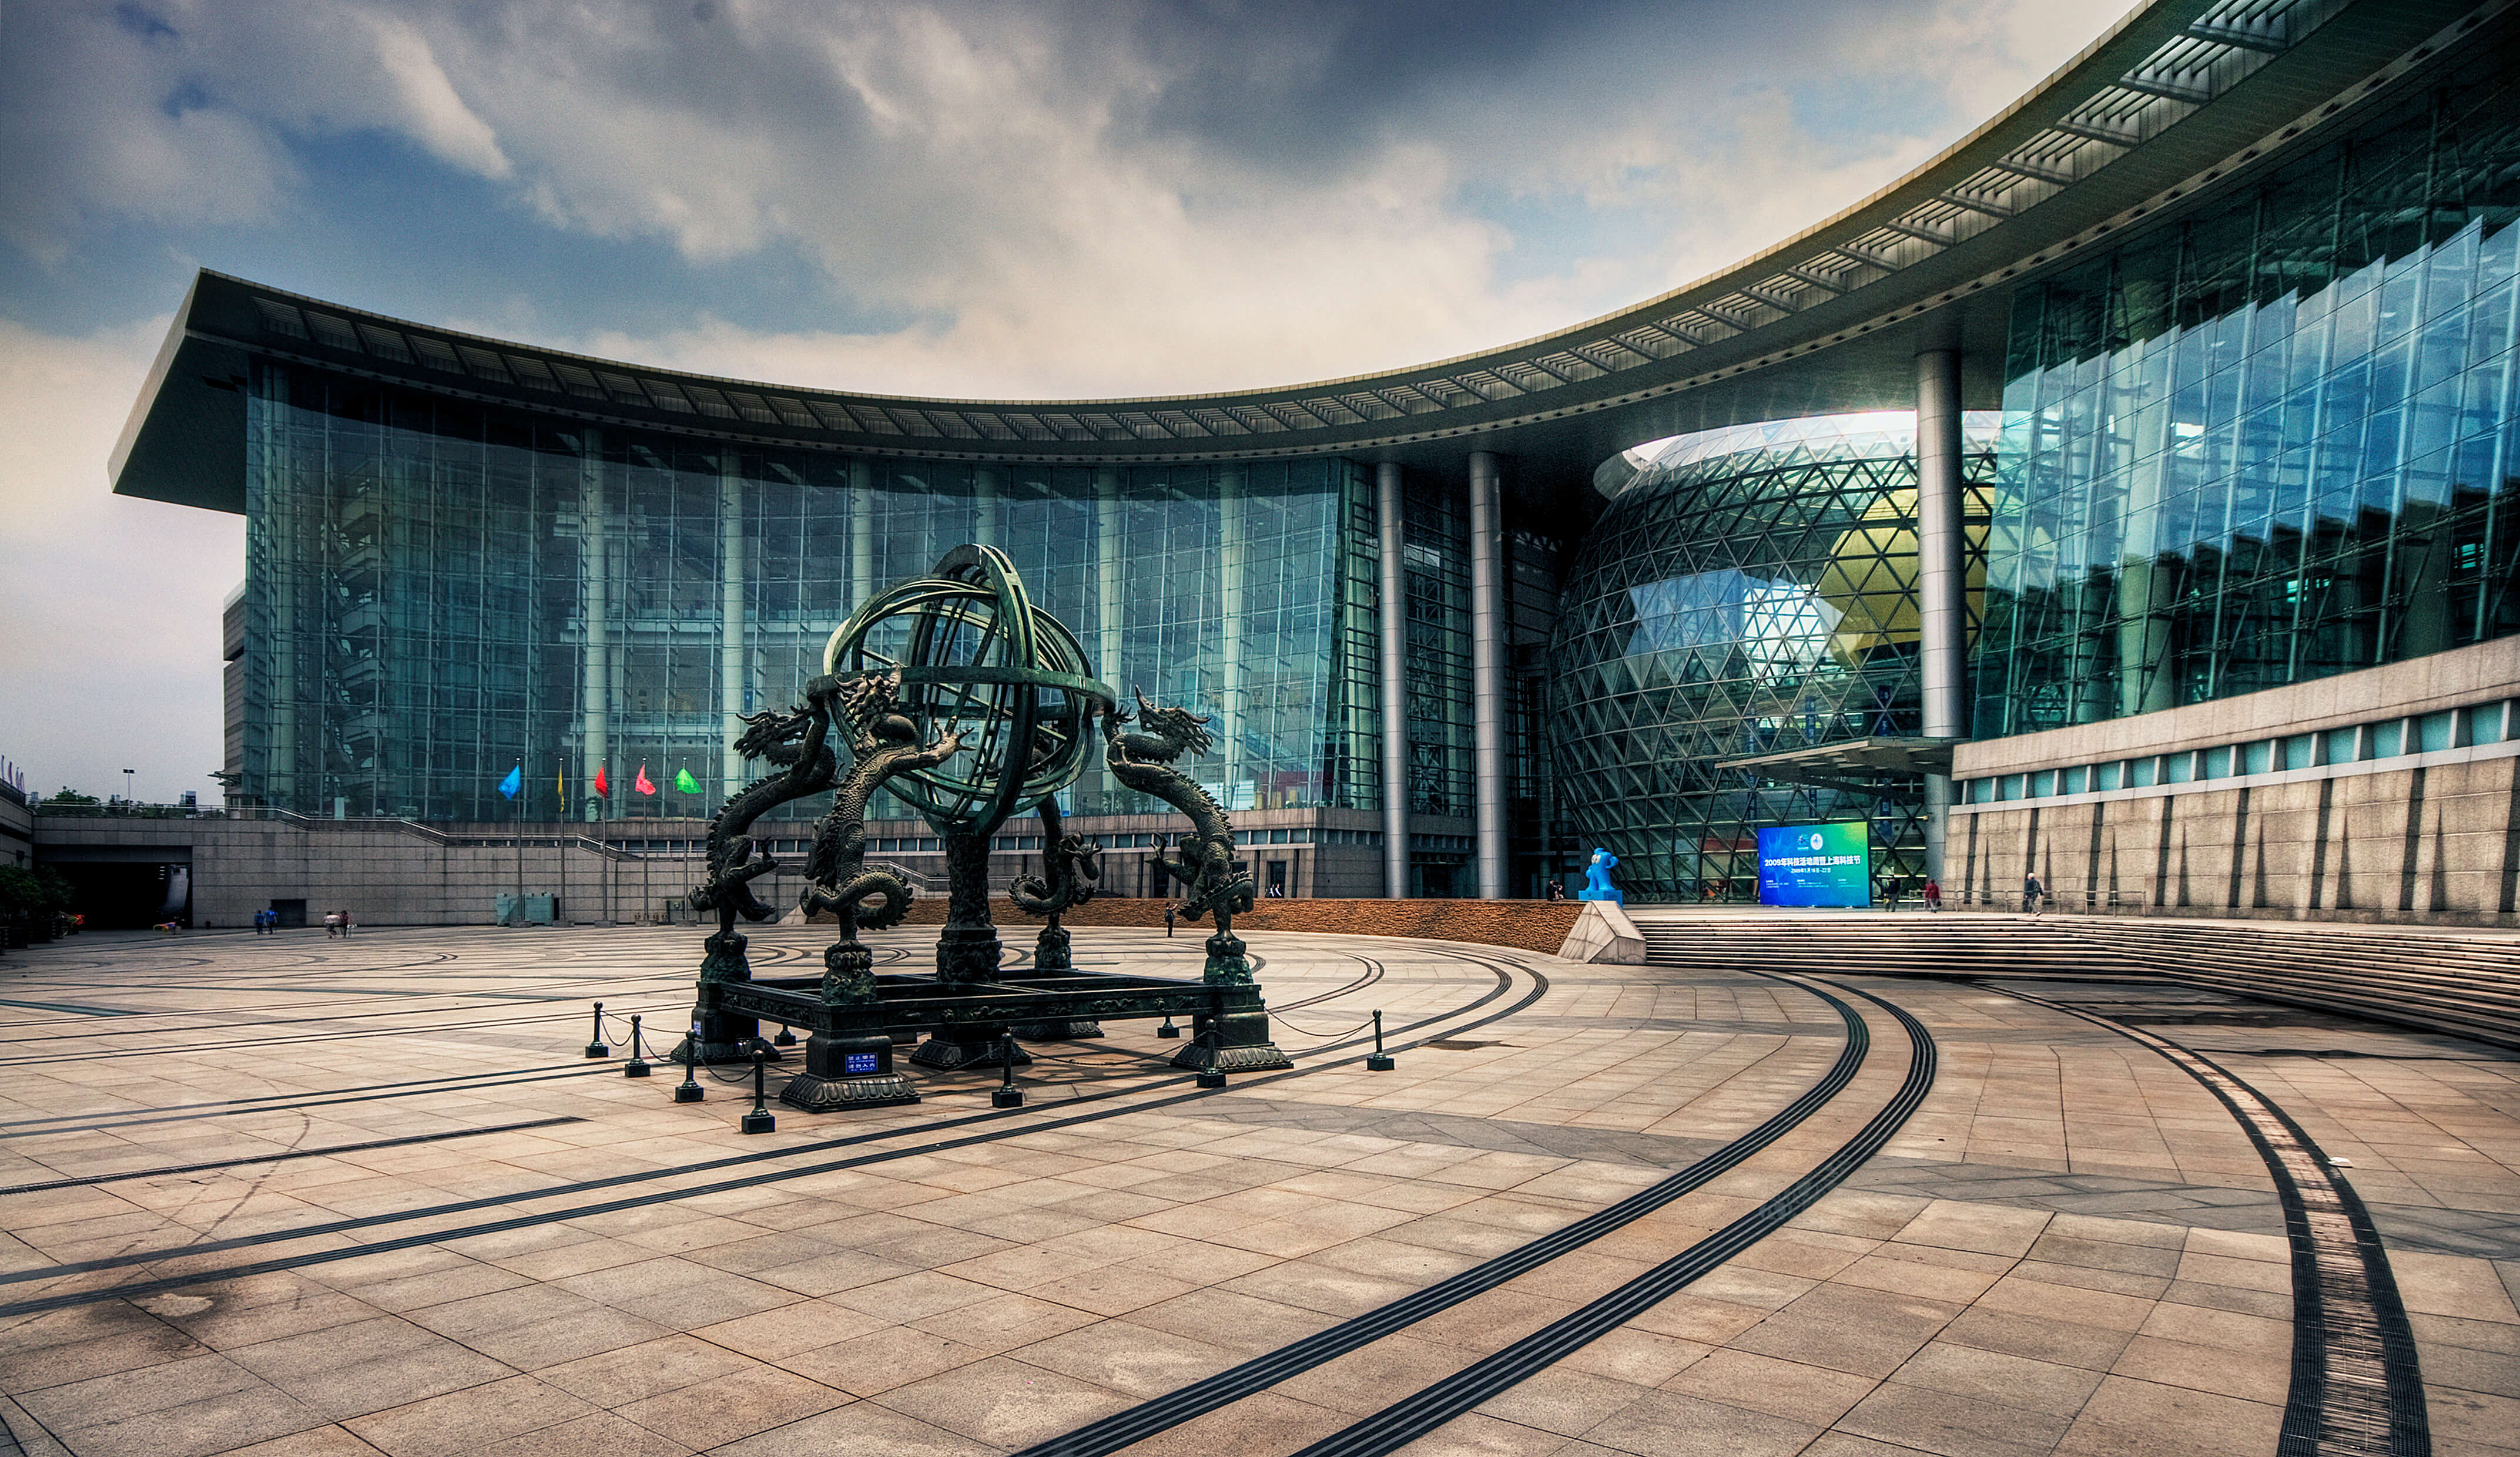 Technologisch museum in Shanghai. © Flickr / Wolfgang Staudt